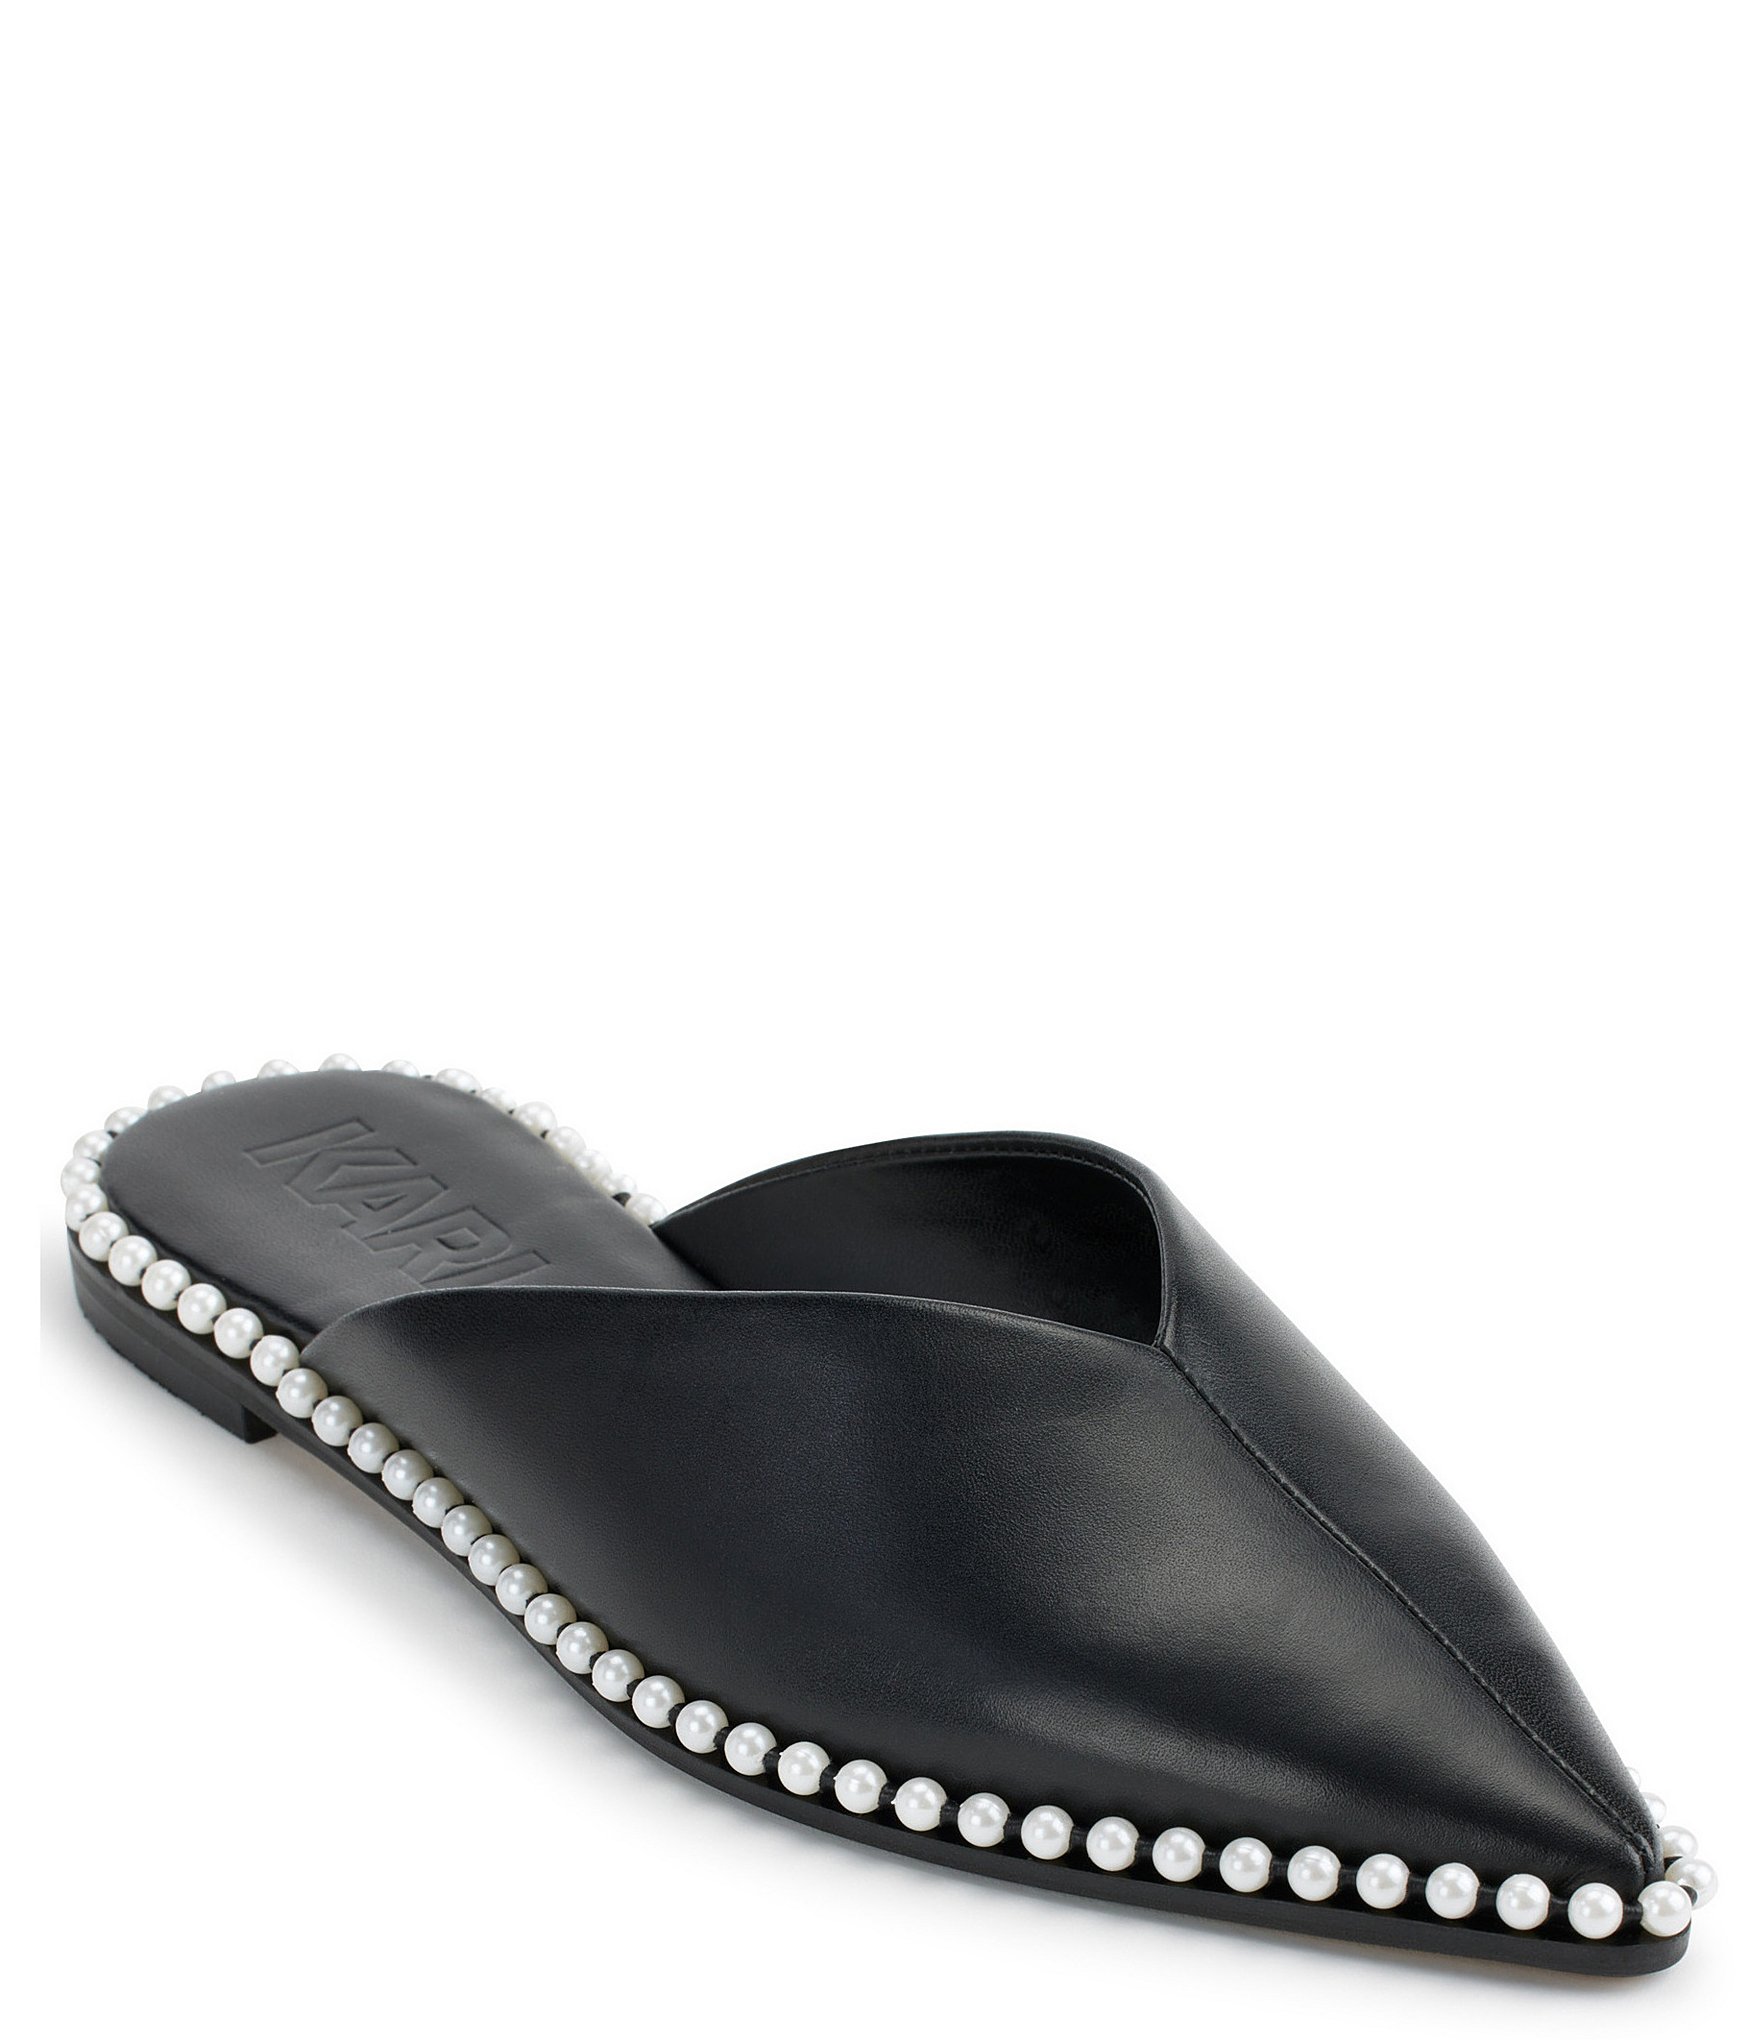 Karl Lagerfeld | Shoes | Karl Lagerfeld Sallie Black Leather Round Toe  Pumps Pearl Heels Size 8m | Poshmark